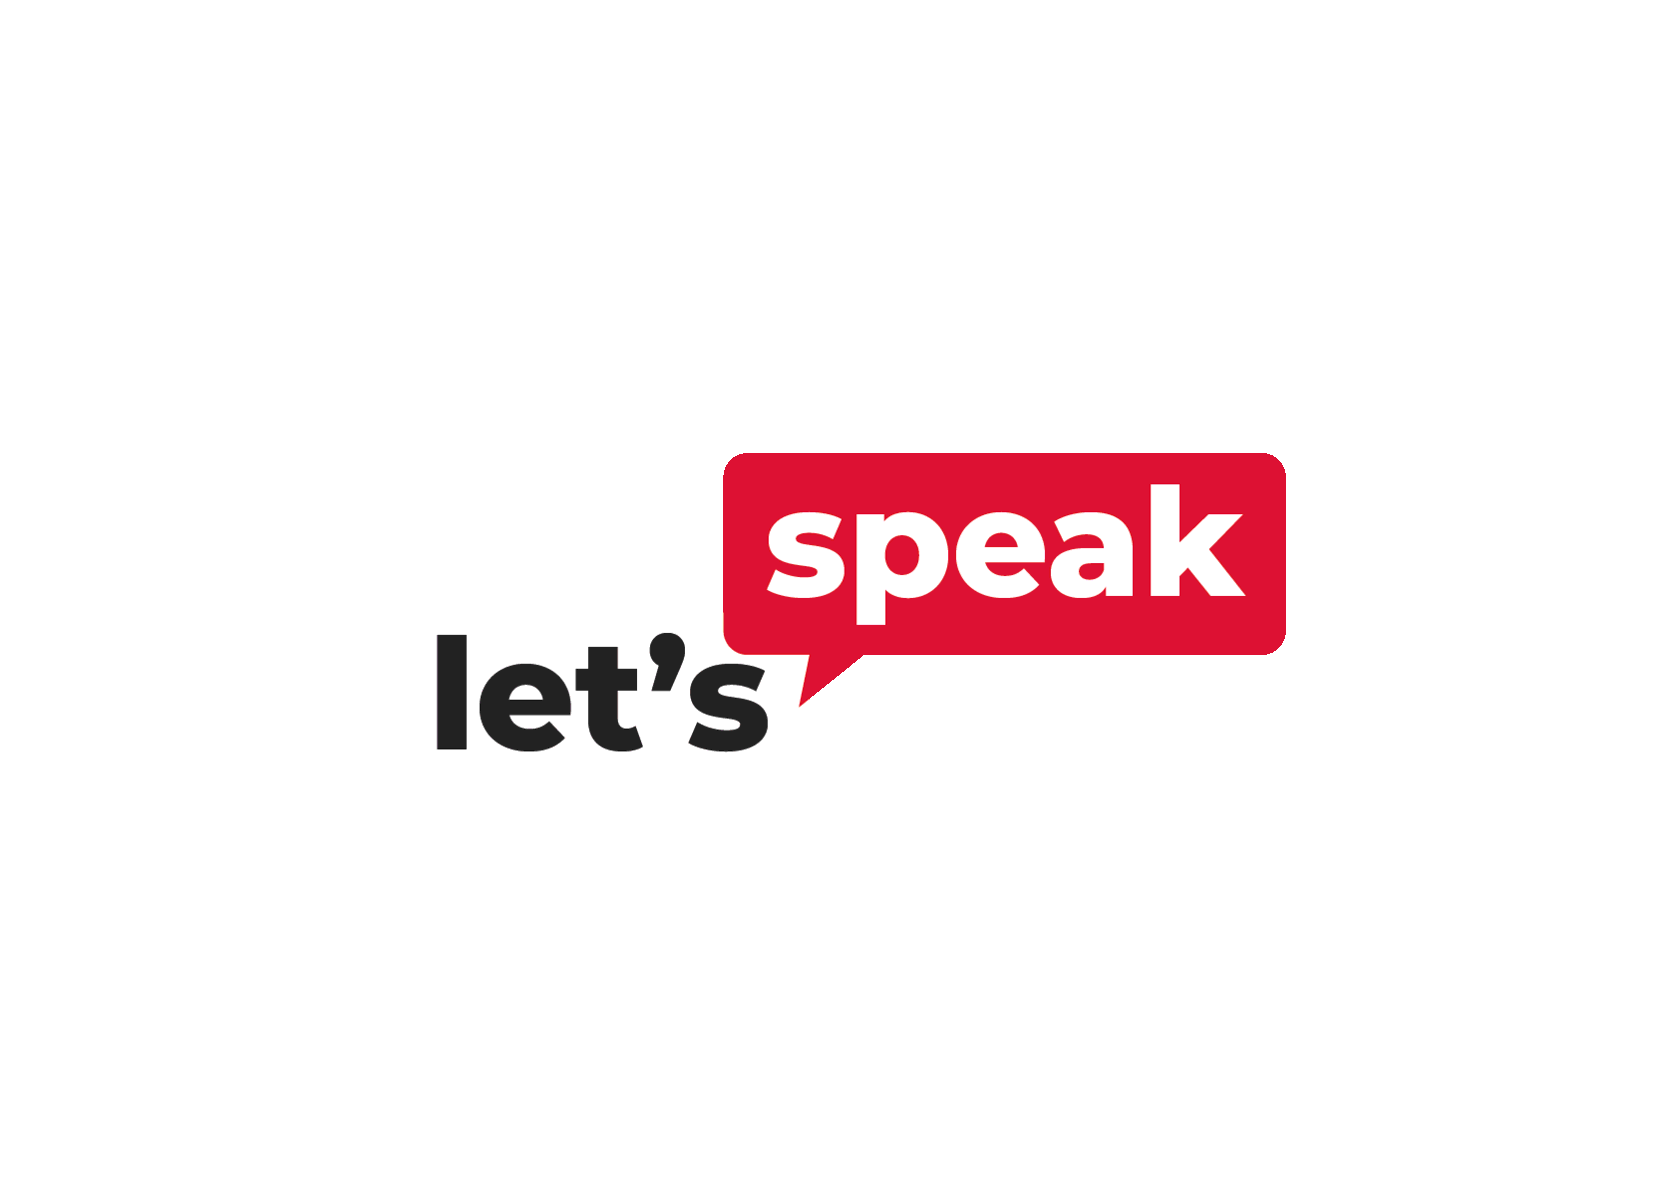 Let them speak. Let's speak.